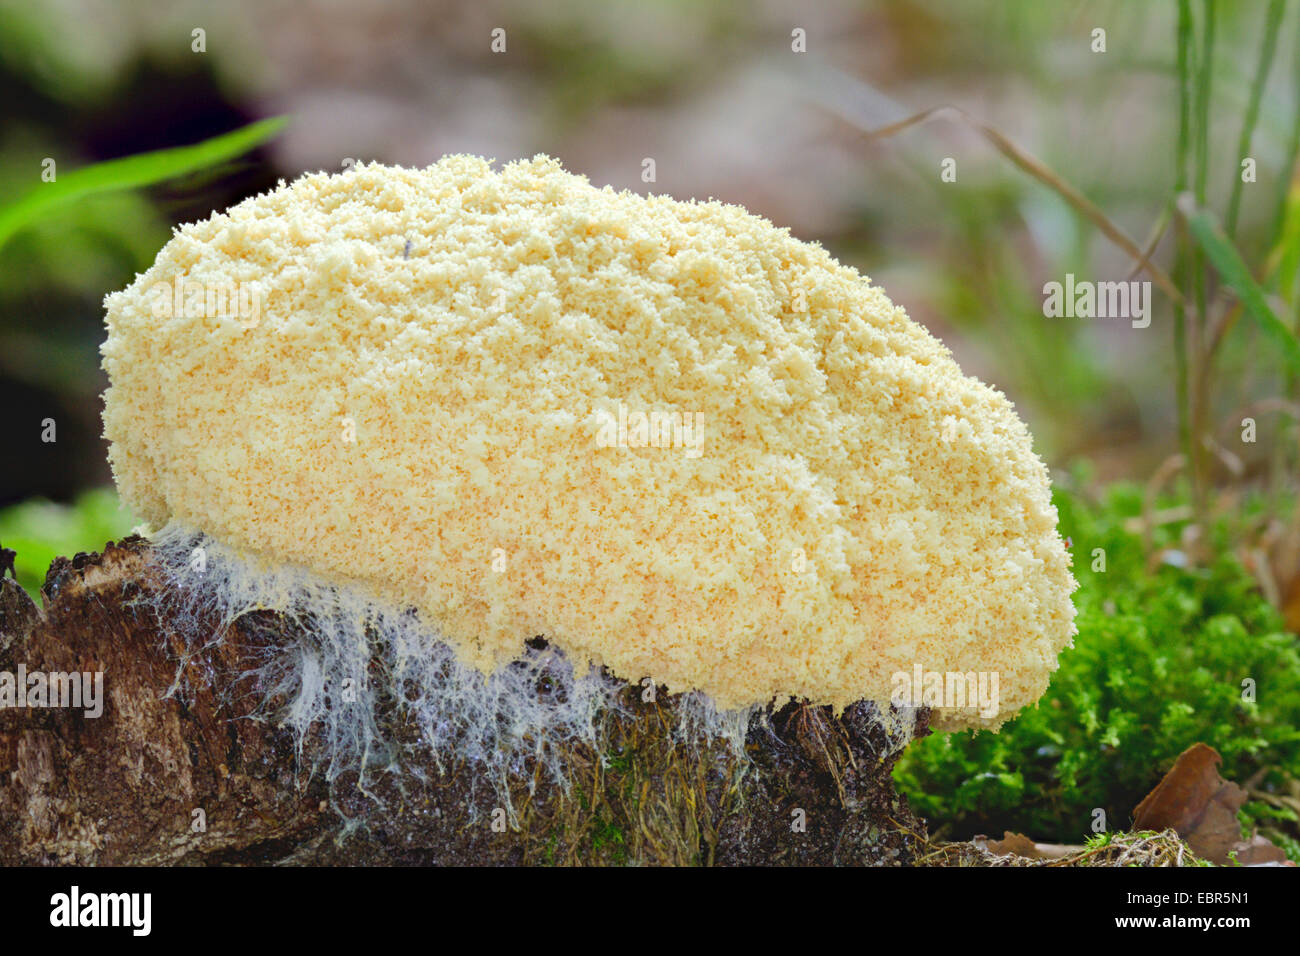 Dog vomit slime mold, Scrambled egg slime (Fuligo septica), on deadwood, Germany Stock Photo